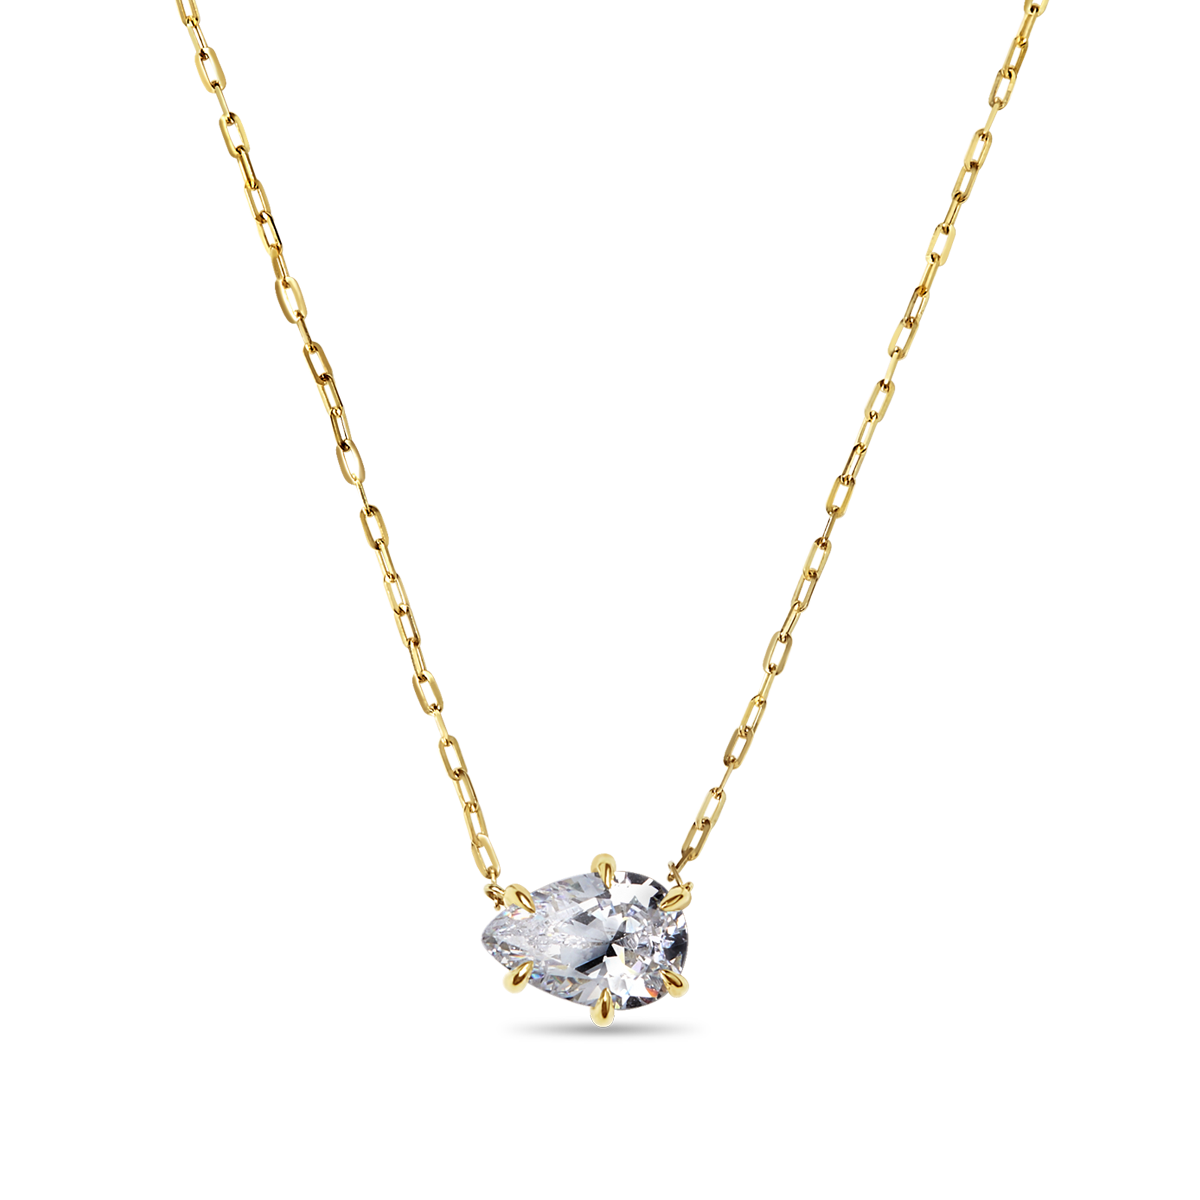 Designer 14K Yellow Gold Pear Shape Diamond Pendant